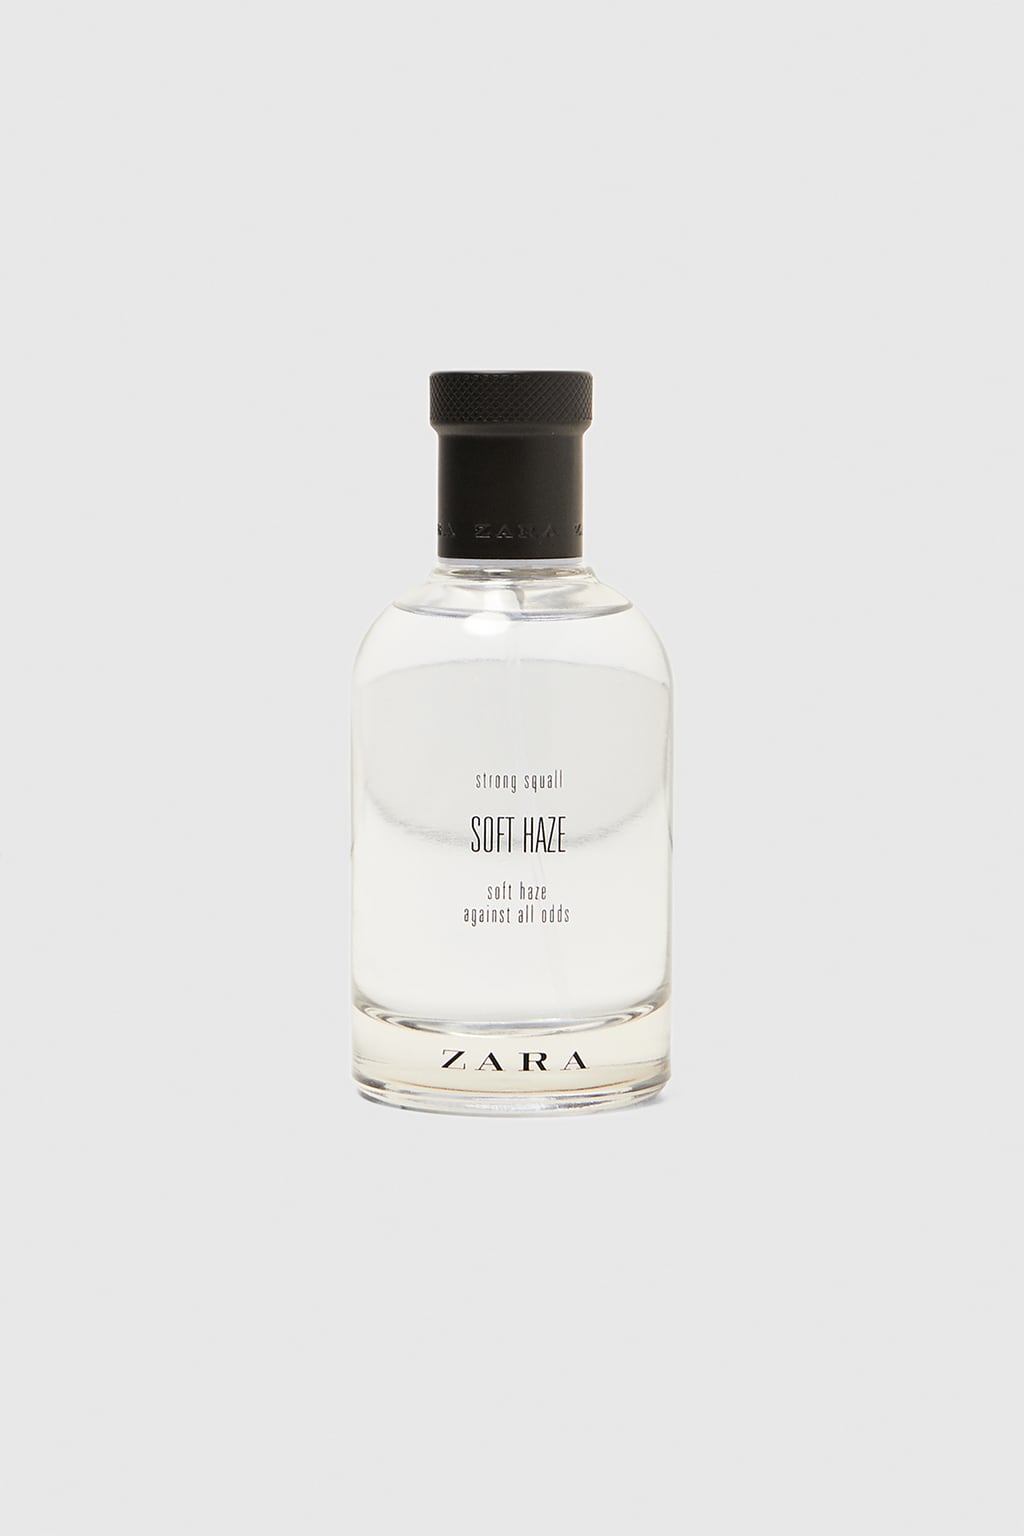 zara mens fragrance smells like creed